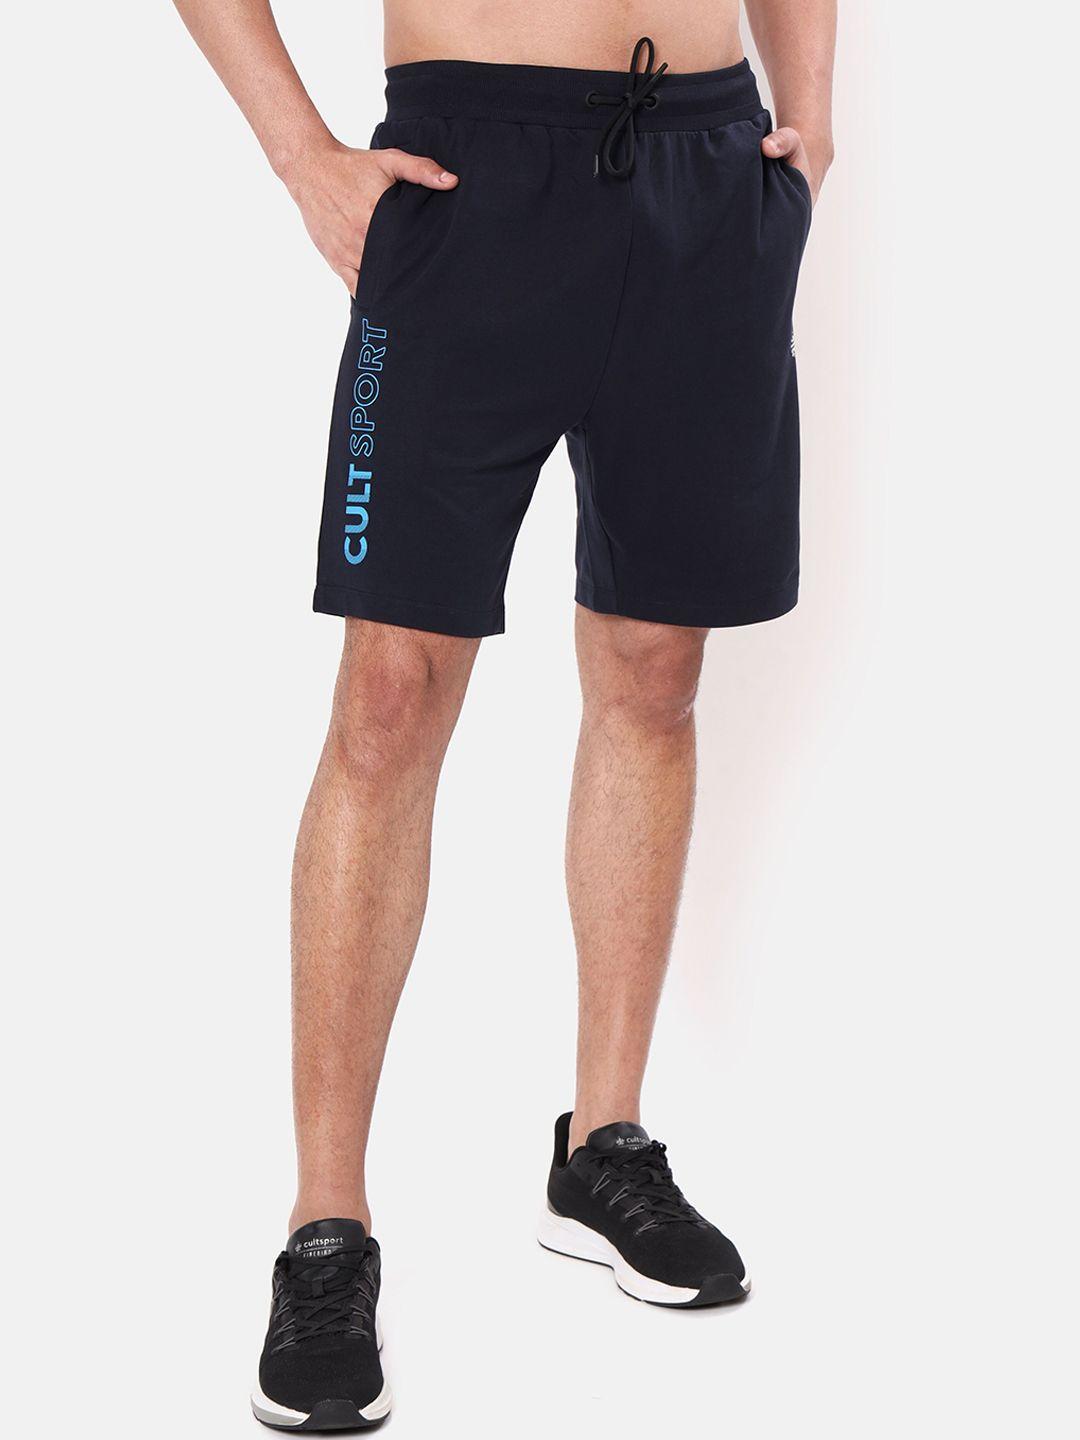 cultsport men navy blue running sports shorts